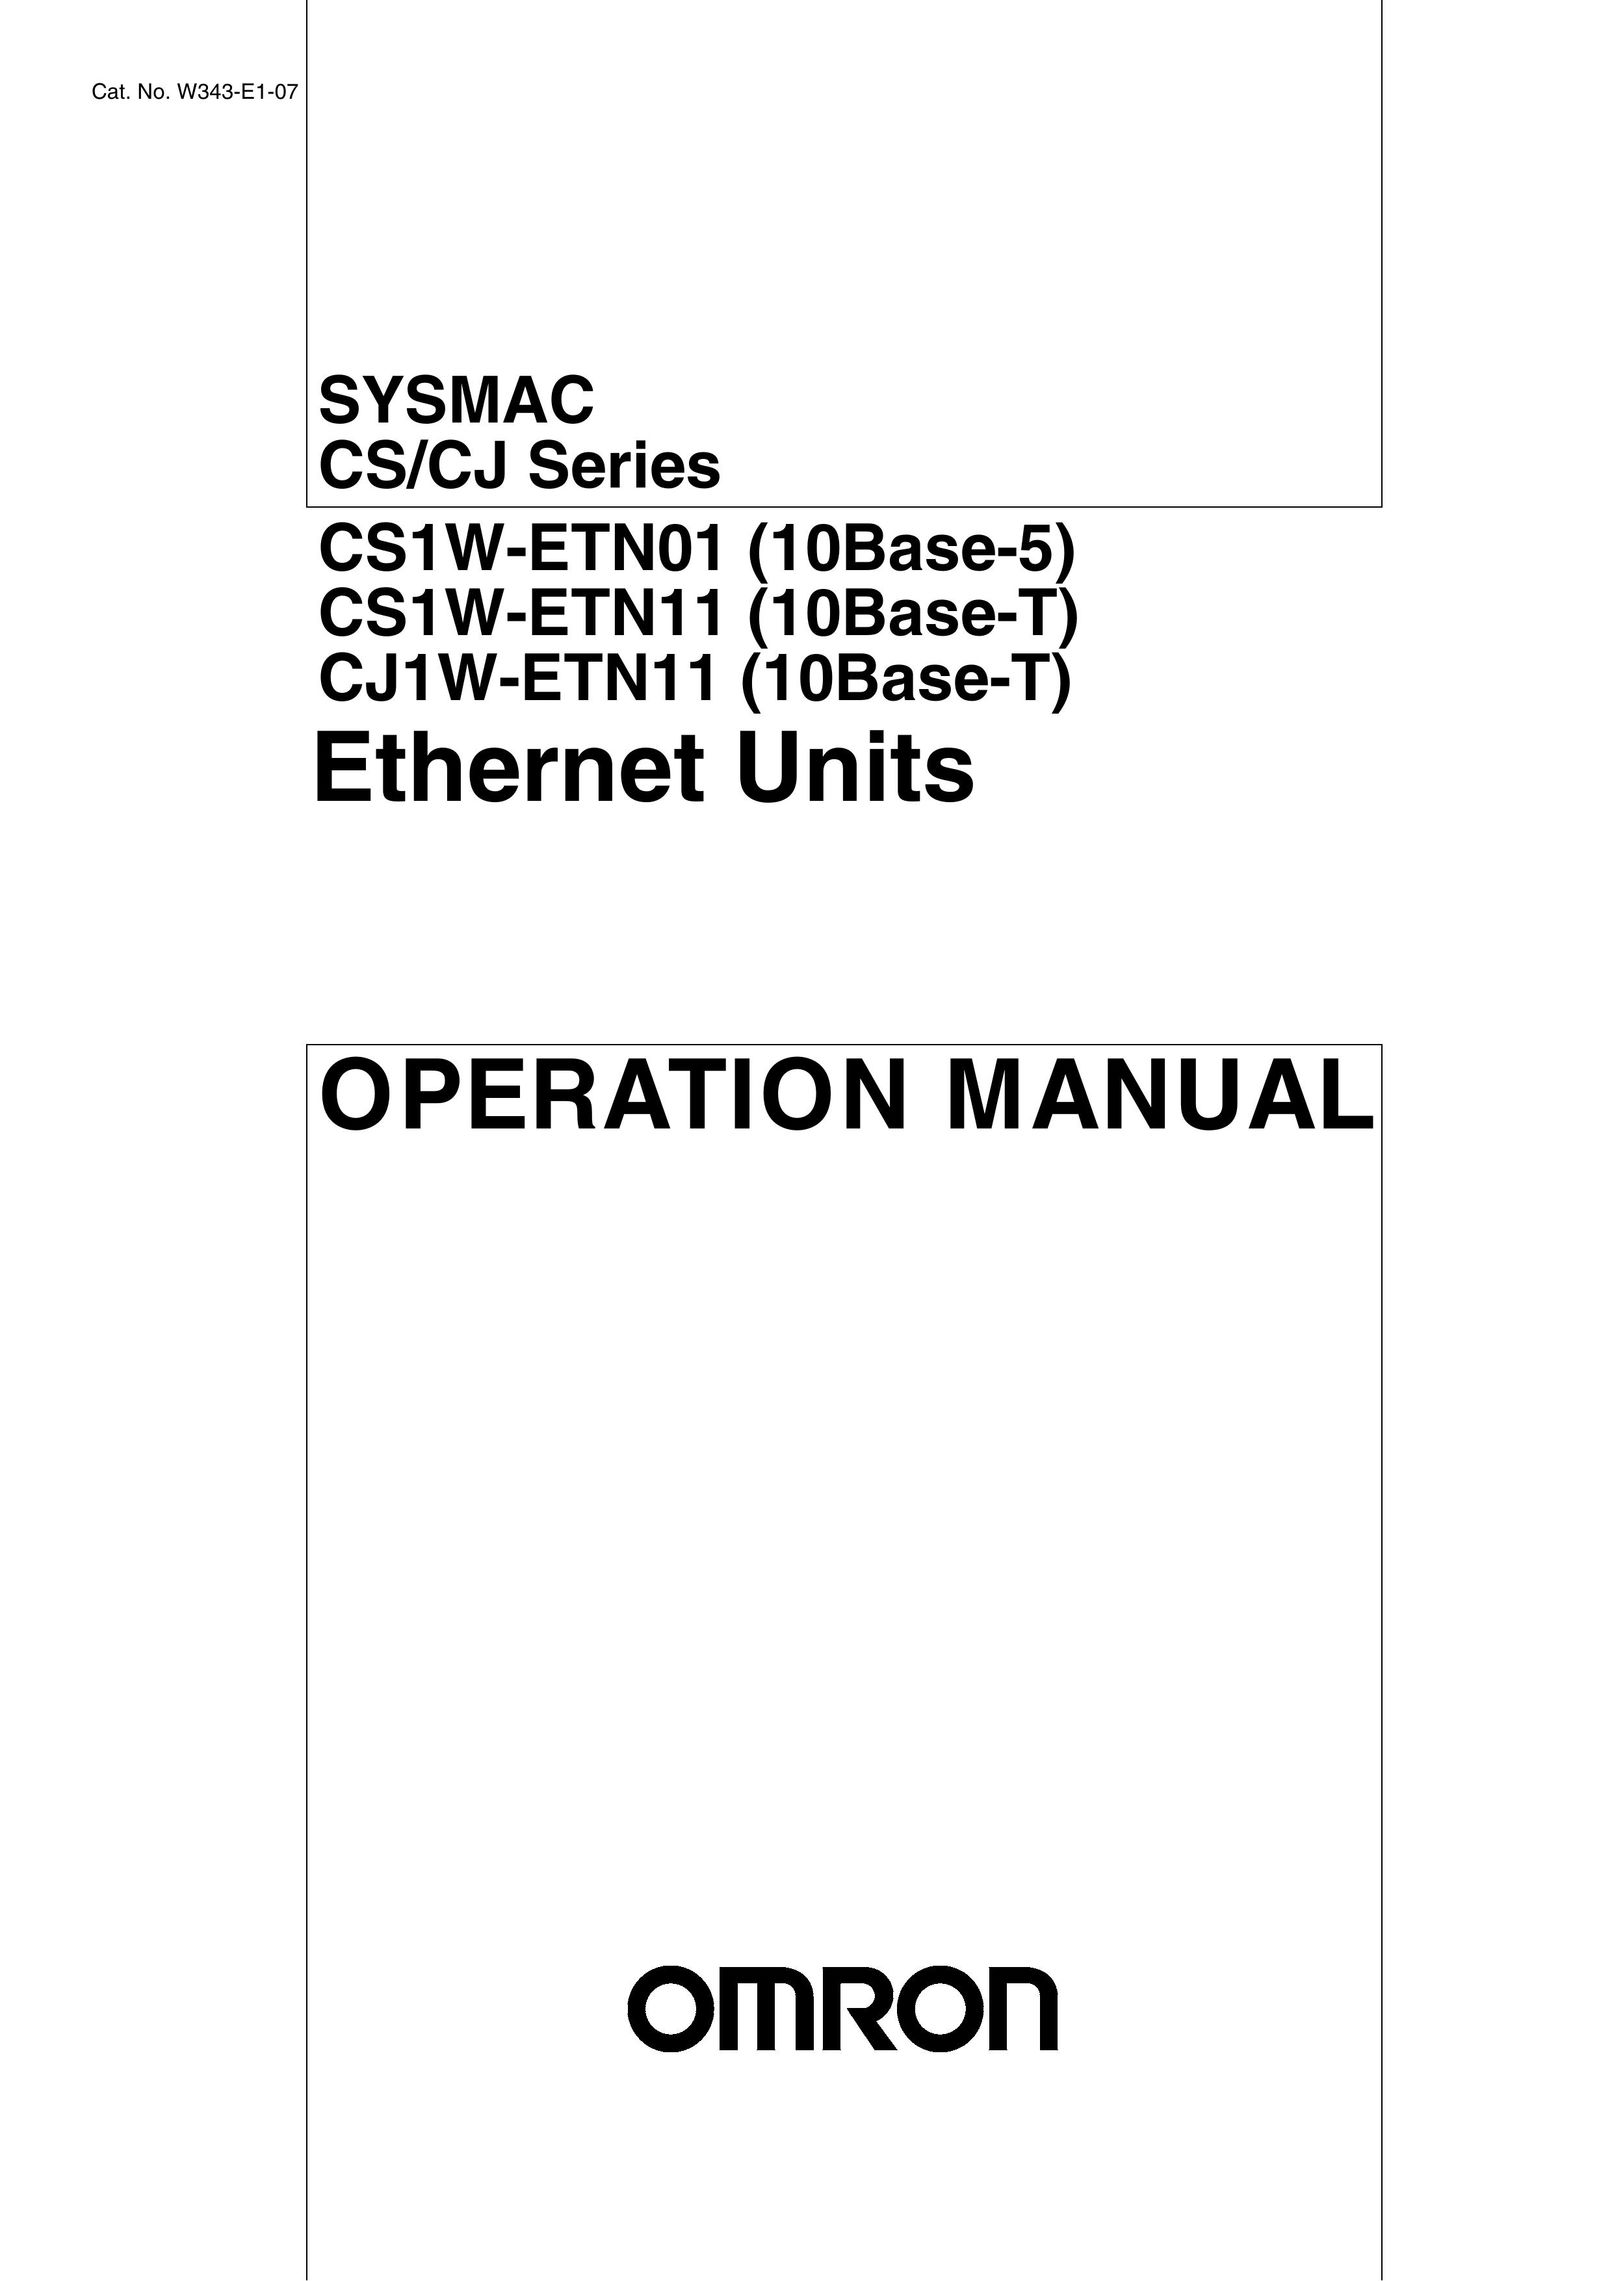 Omron CS1W-ETN01 Network Card User Manual